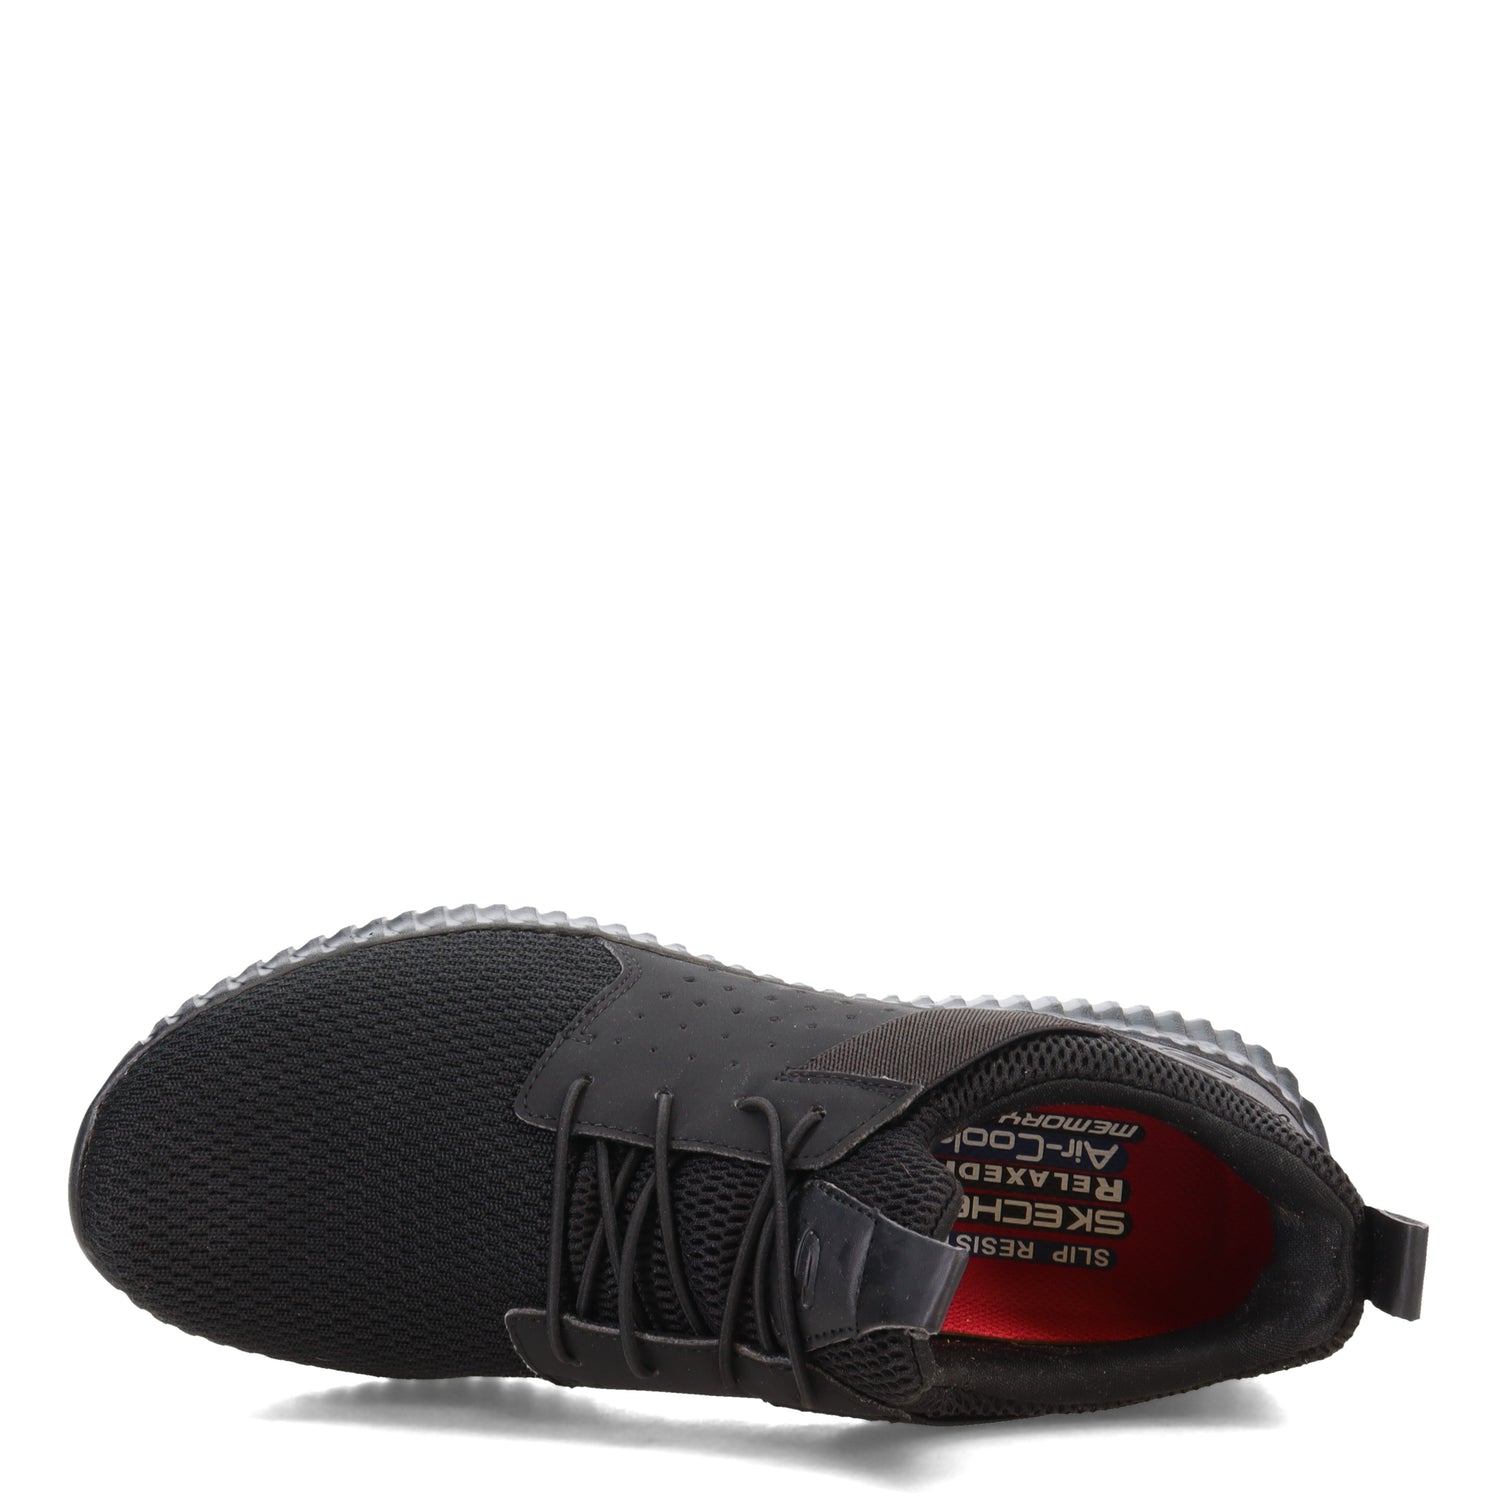 Peltz Shoes  Men's Skechers Work Relaxed Fit: Cessnock - Niehart SR Work Shoe Black 77521-BLK